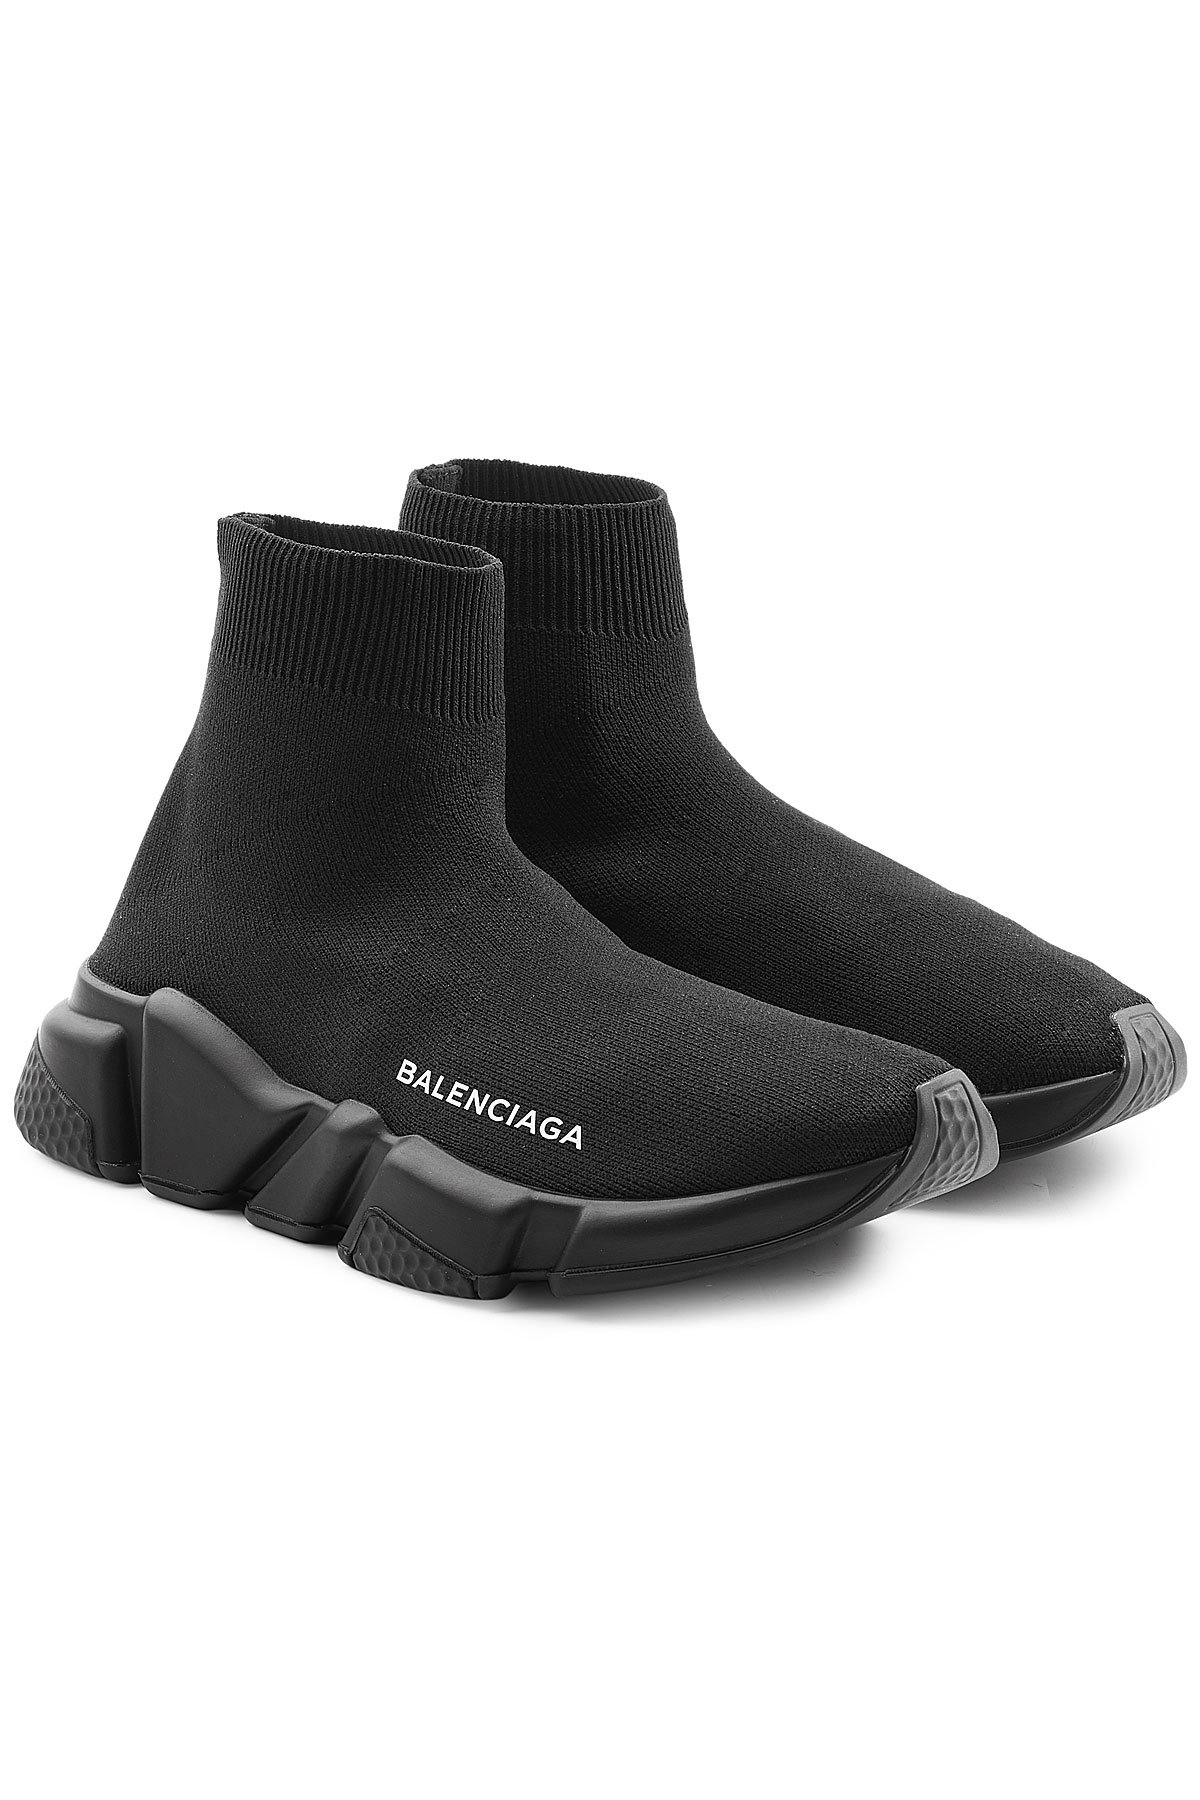 Balenciaga - Speed Sock Sneakers